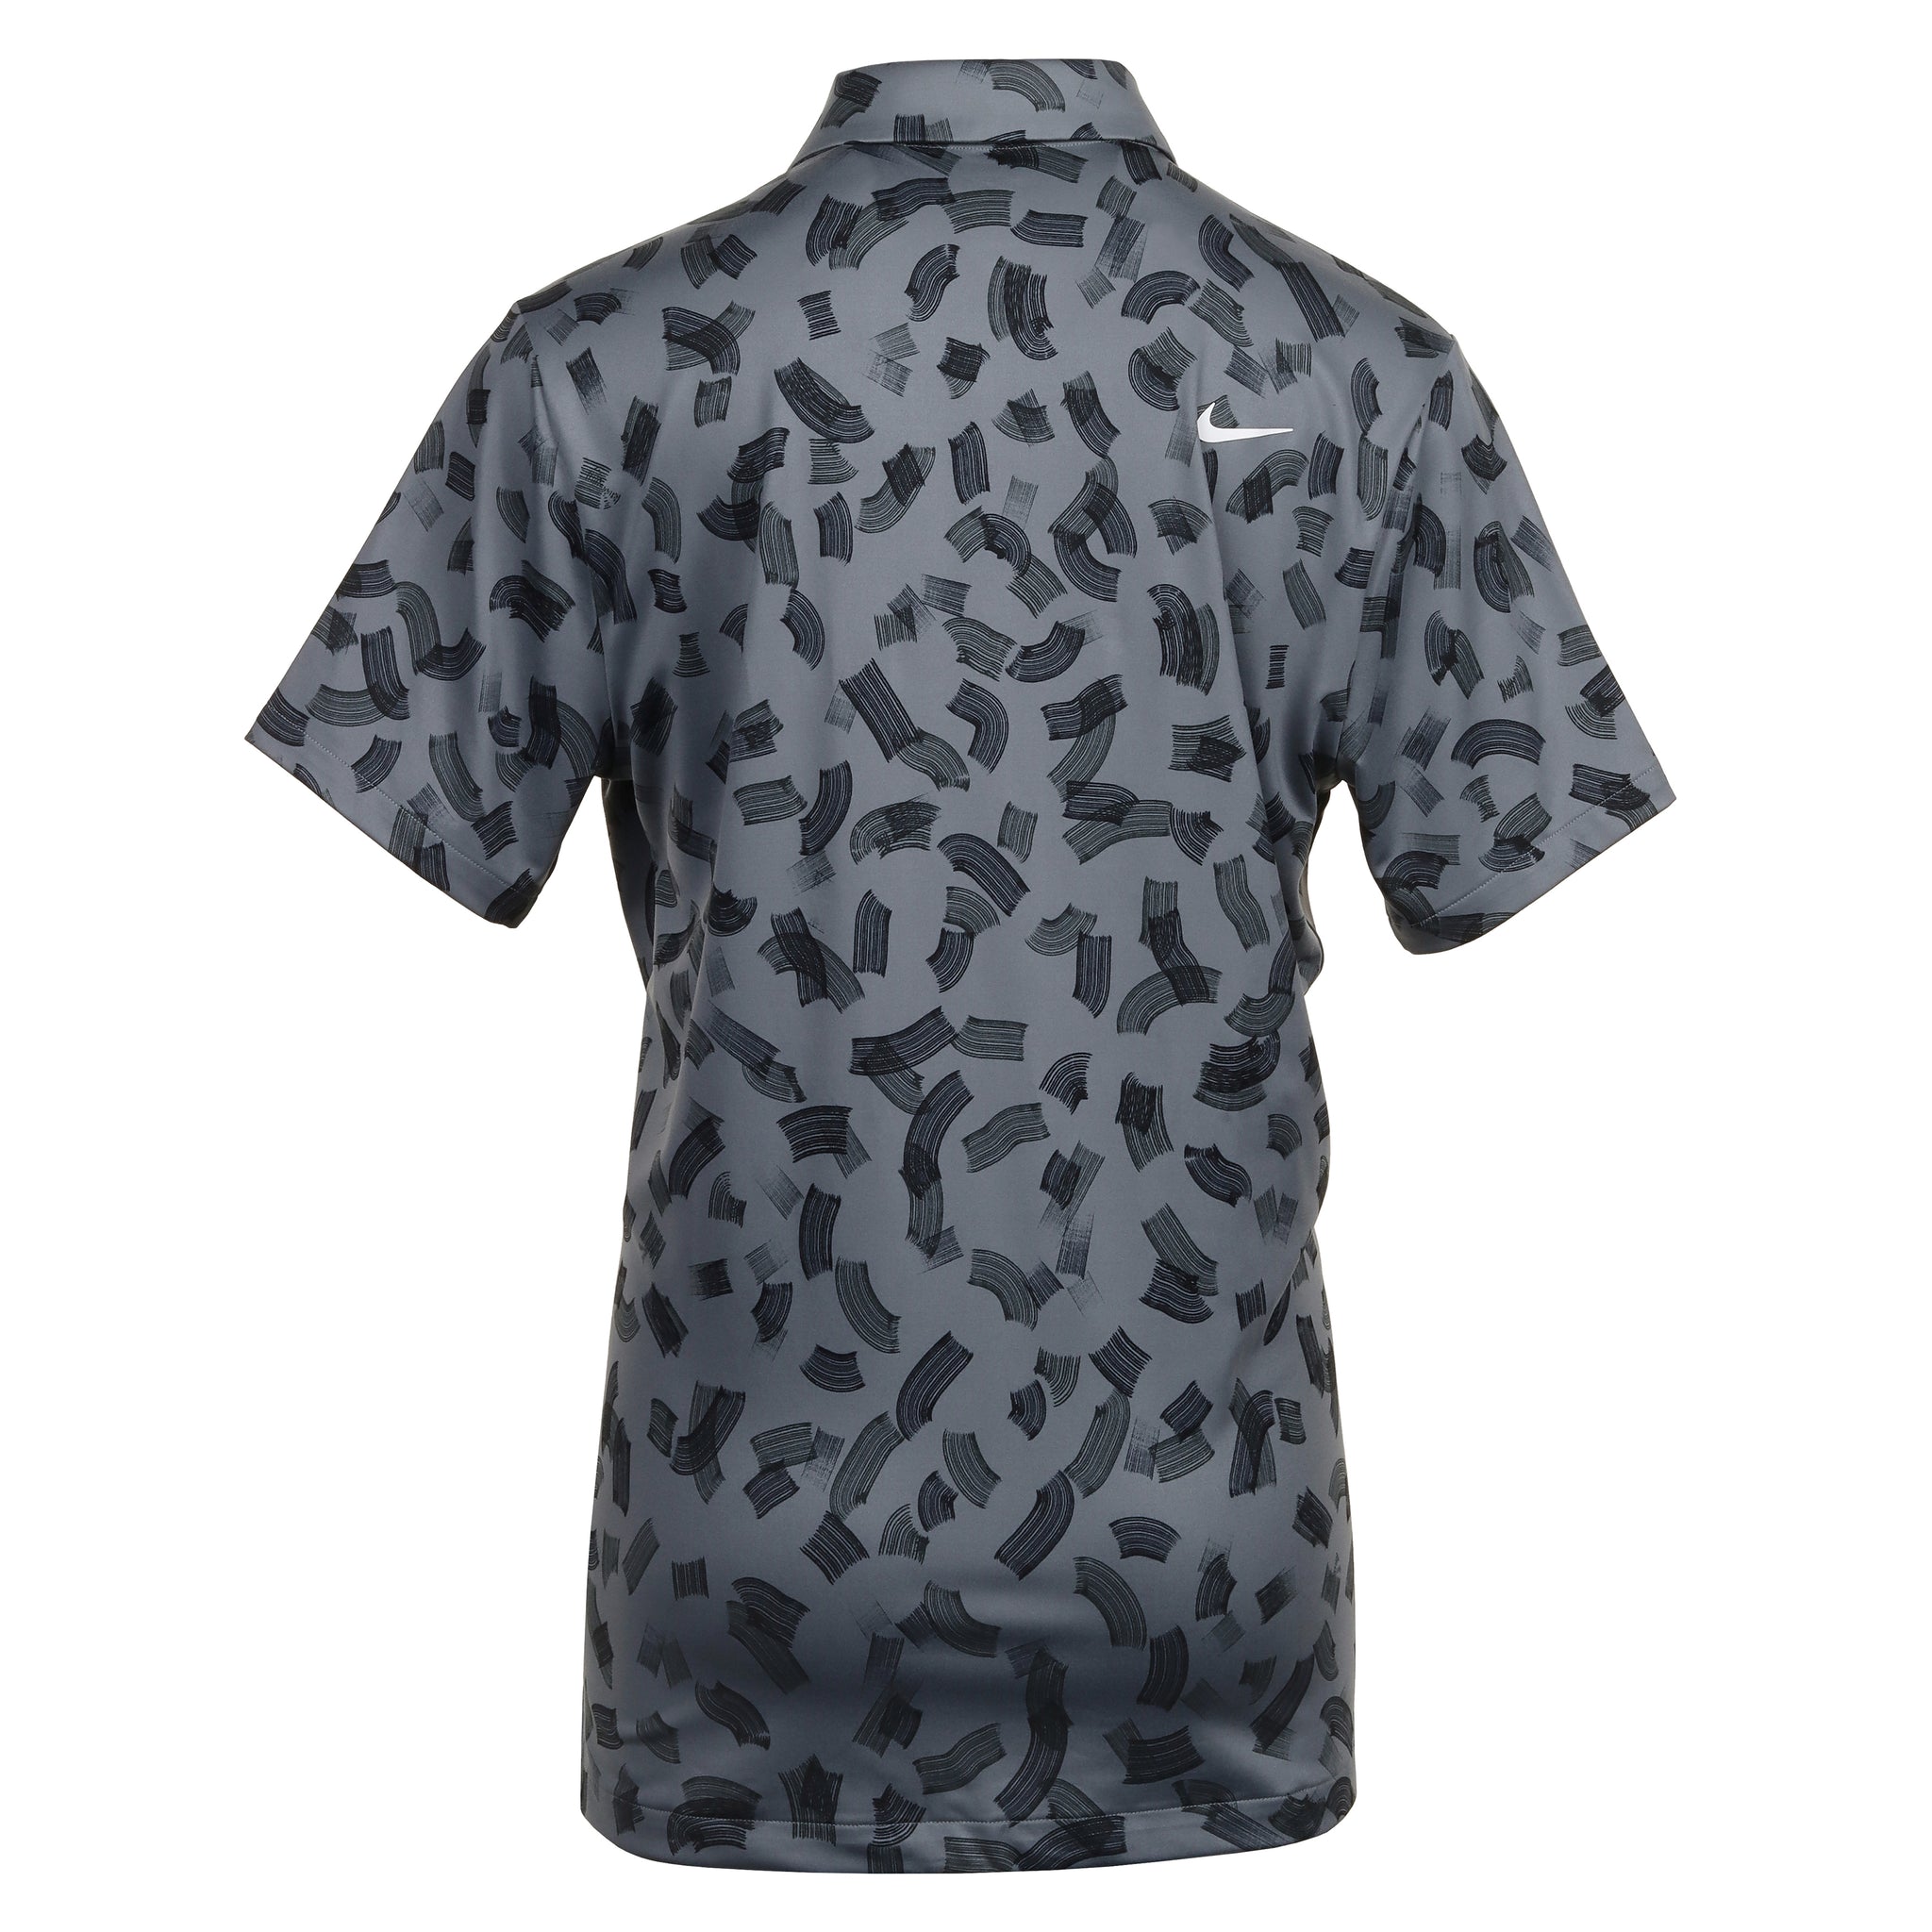 nike-golf-dri-fit-tour-micro-print-shirt-fd5735-070-dark-smoke-grey